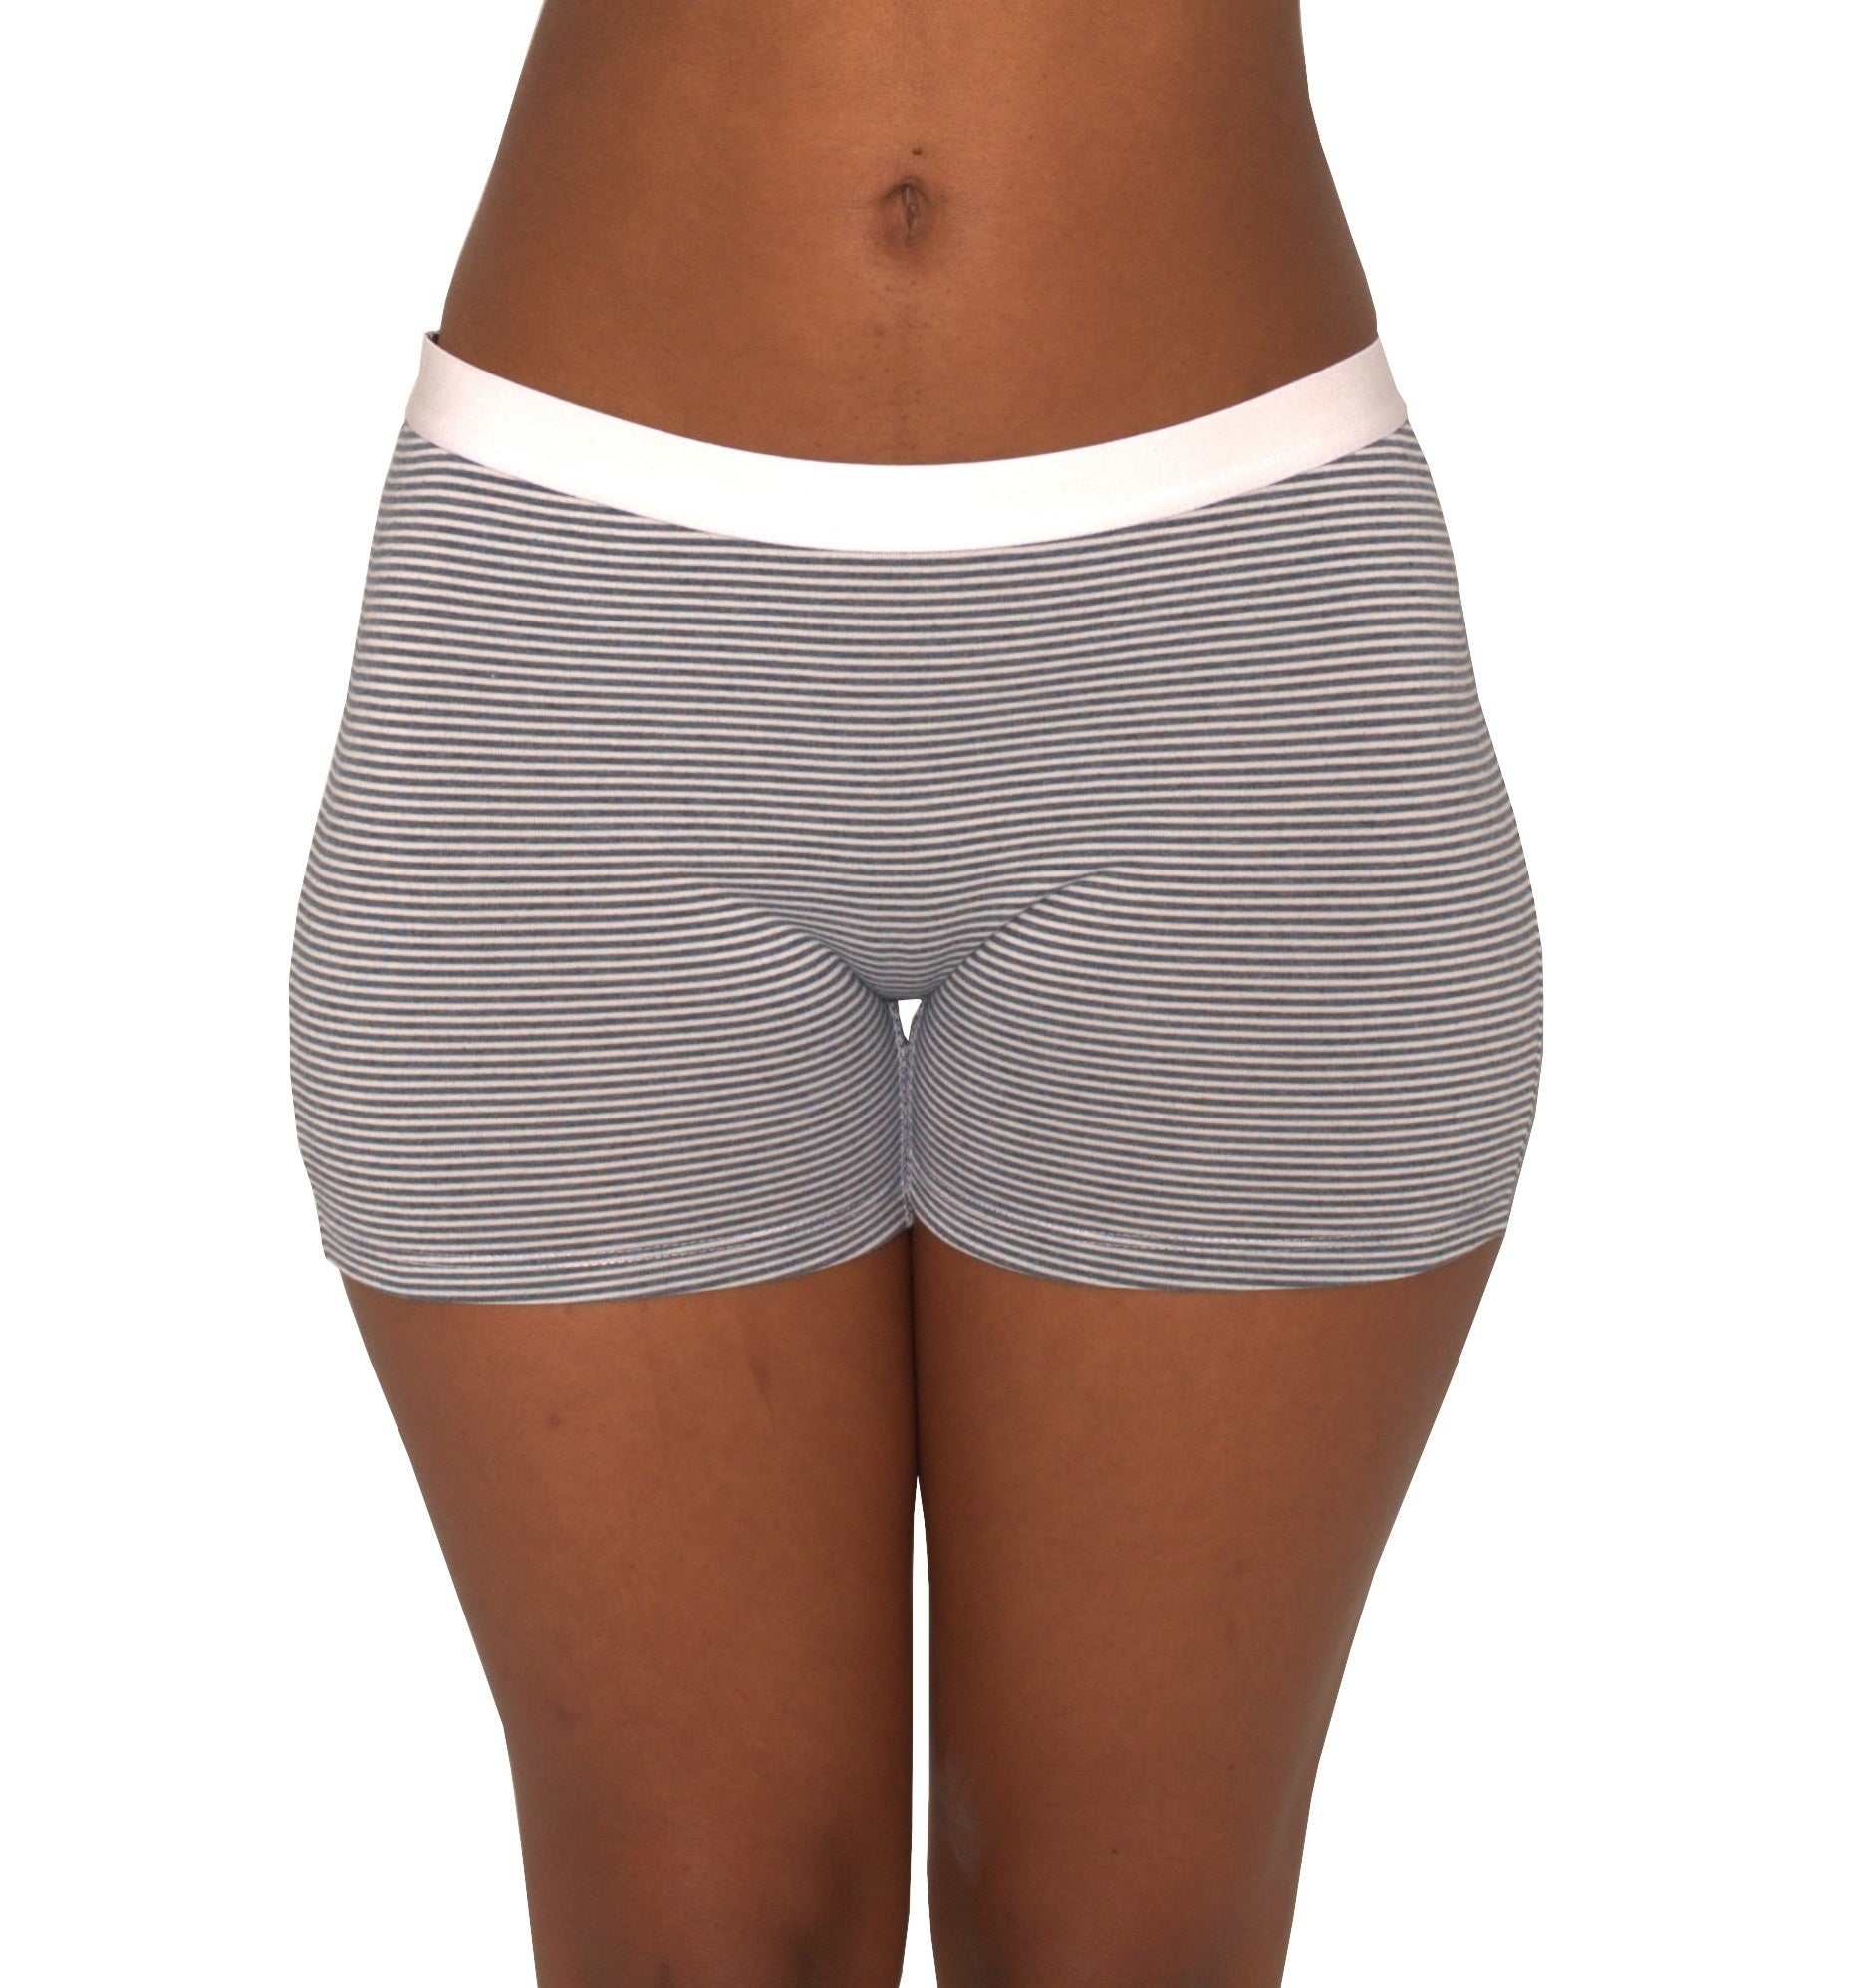 EVARI Women's Boyshort Panties Comfortable Cotton Underwear Pack of 5 OR  Pack of